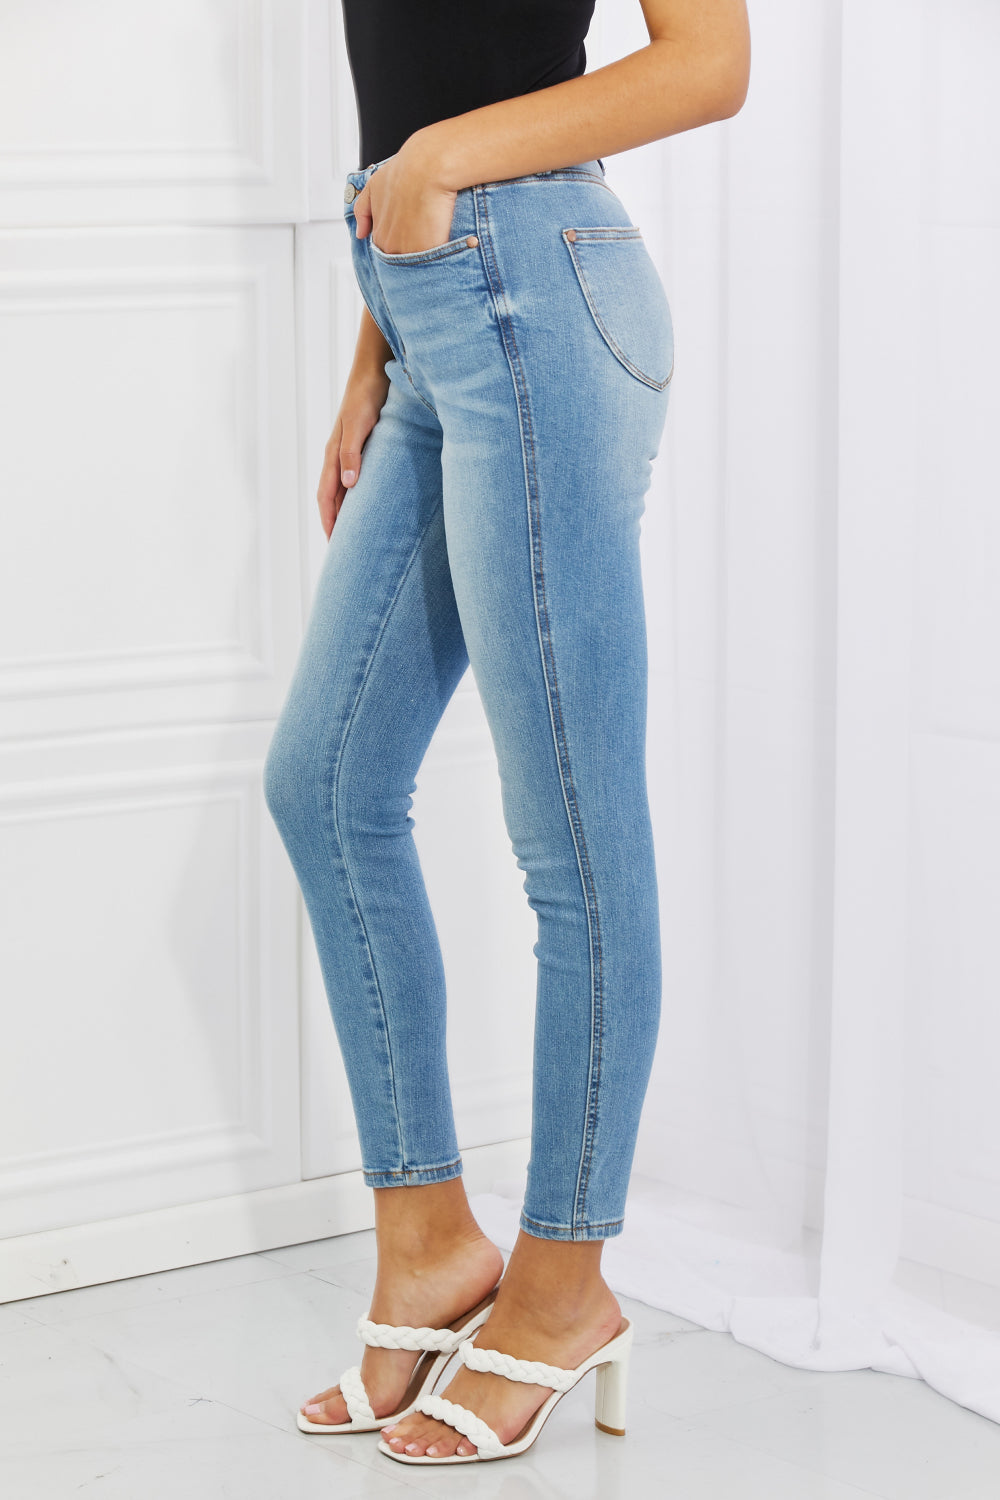 Judy Blue Jeans High Waisted Skinnies